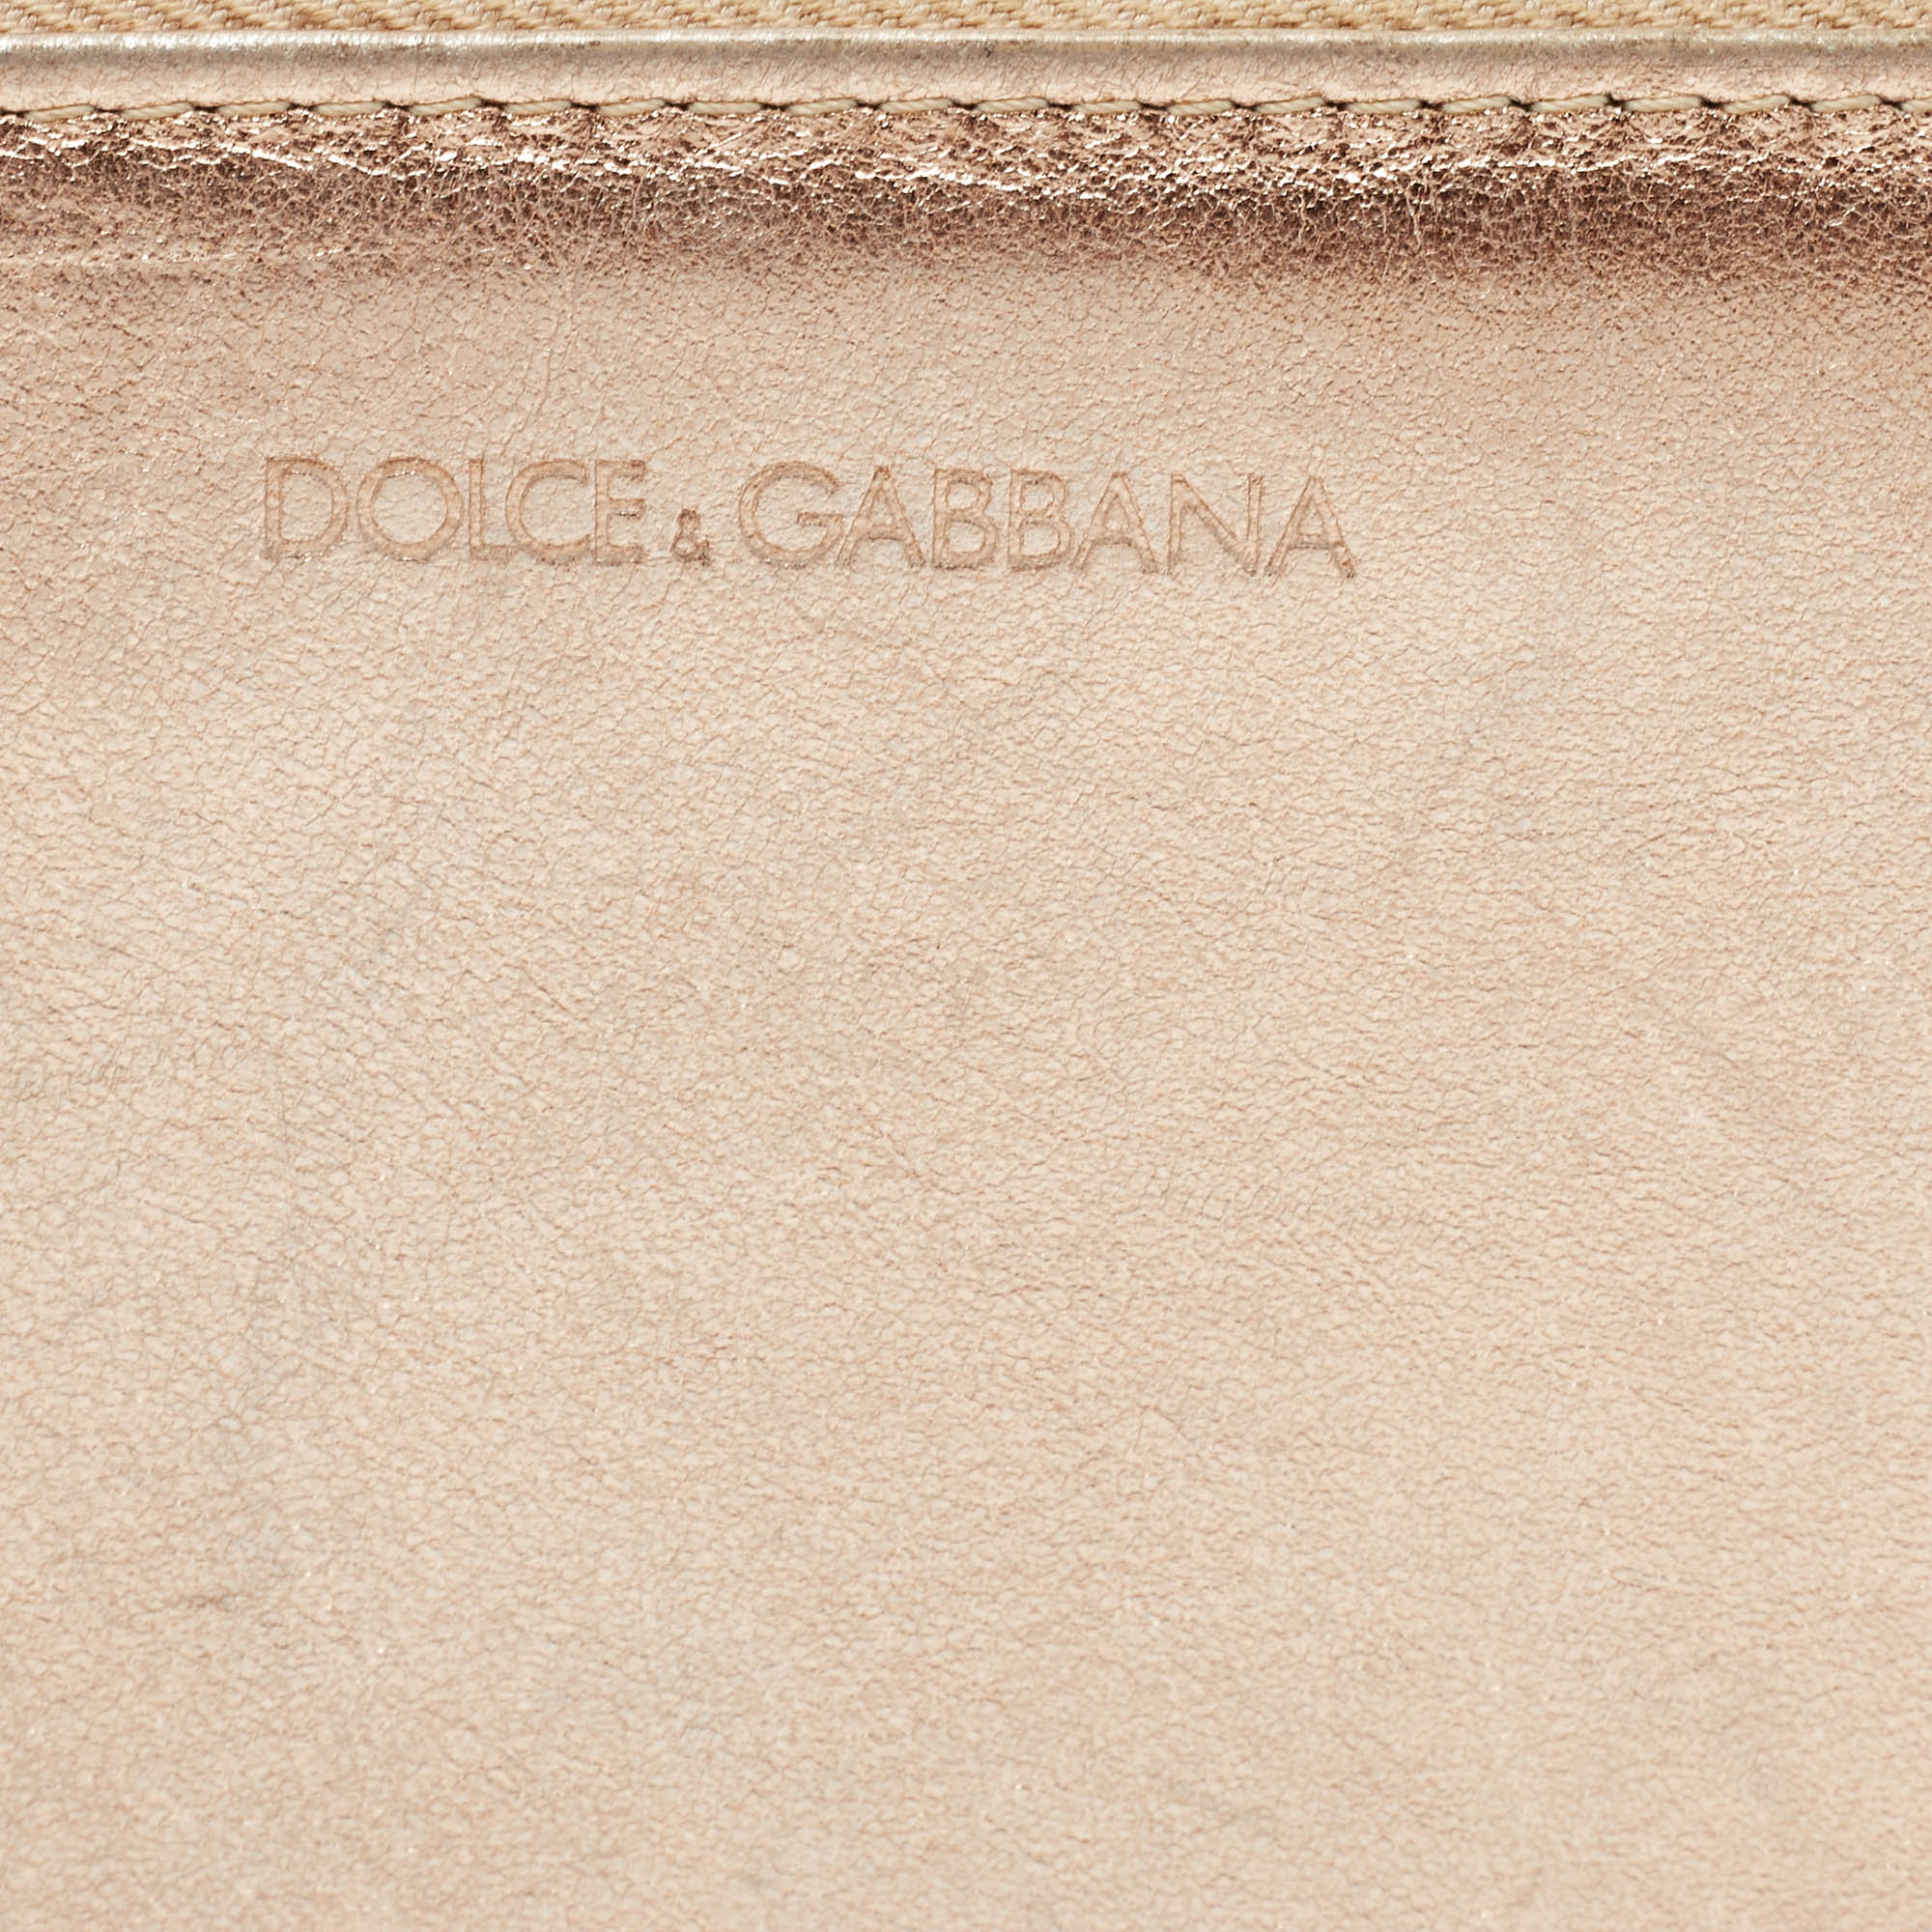 Dolce & Gabbana Metallic Rose Gold Leather Zip Around Wallet